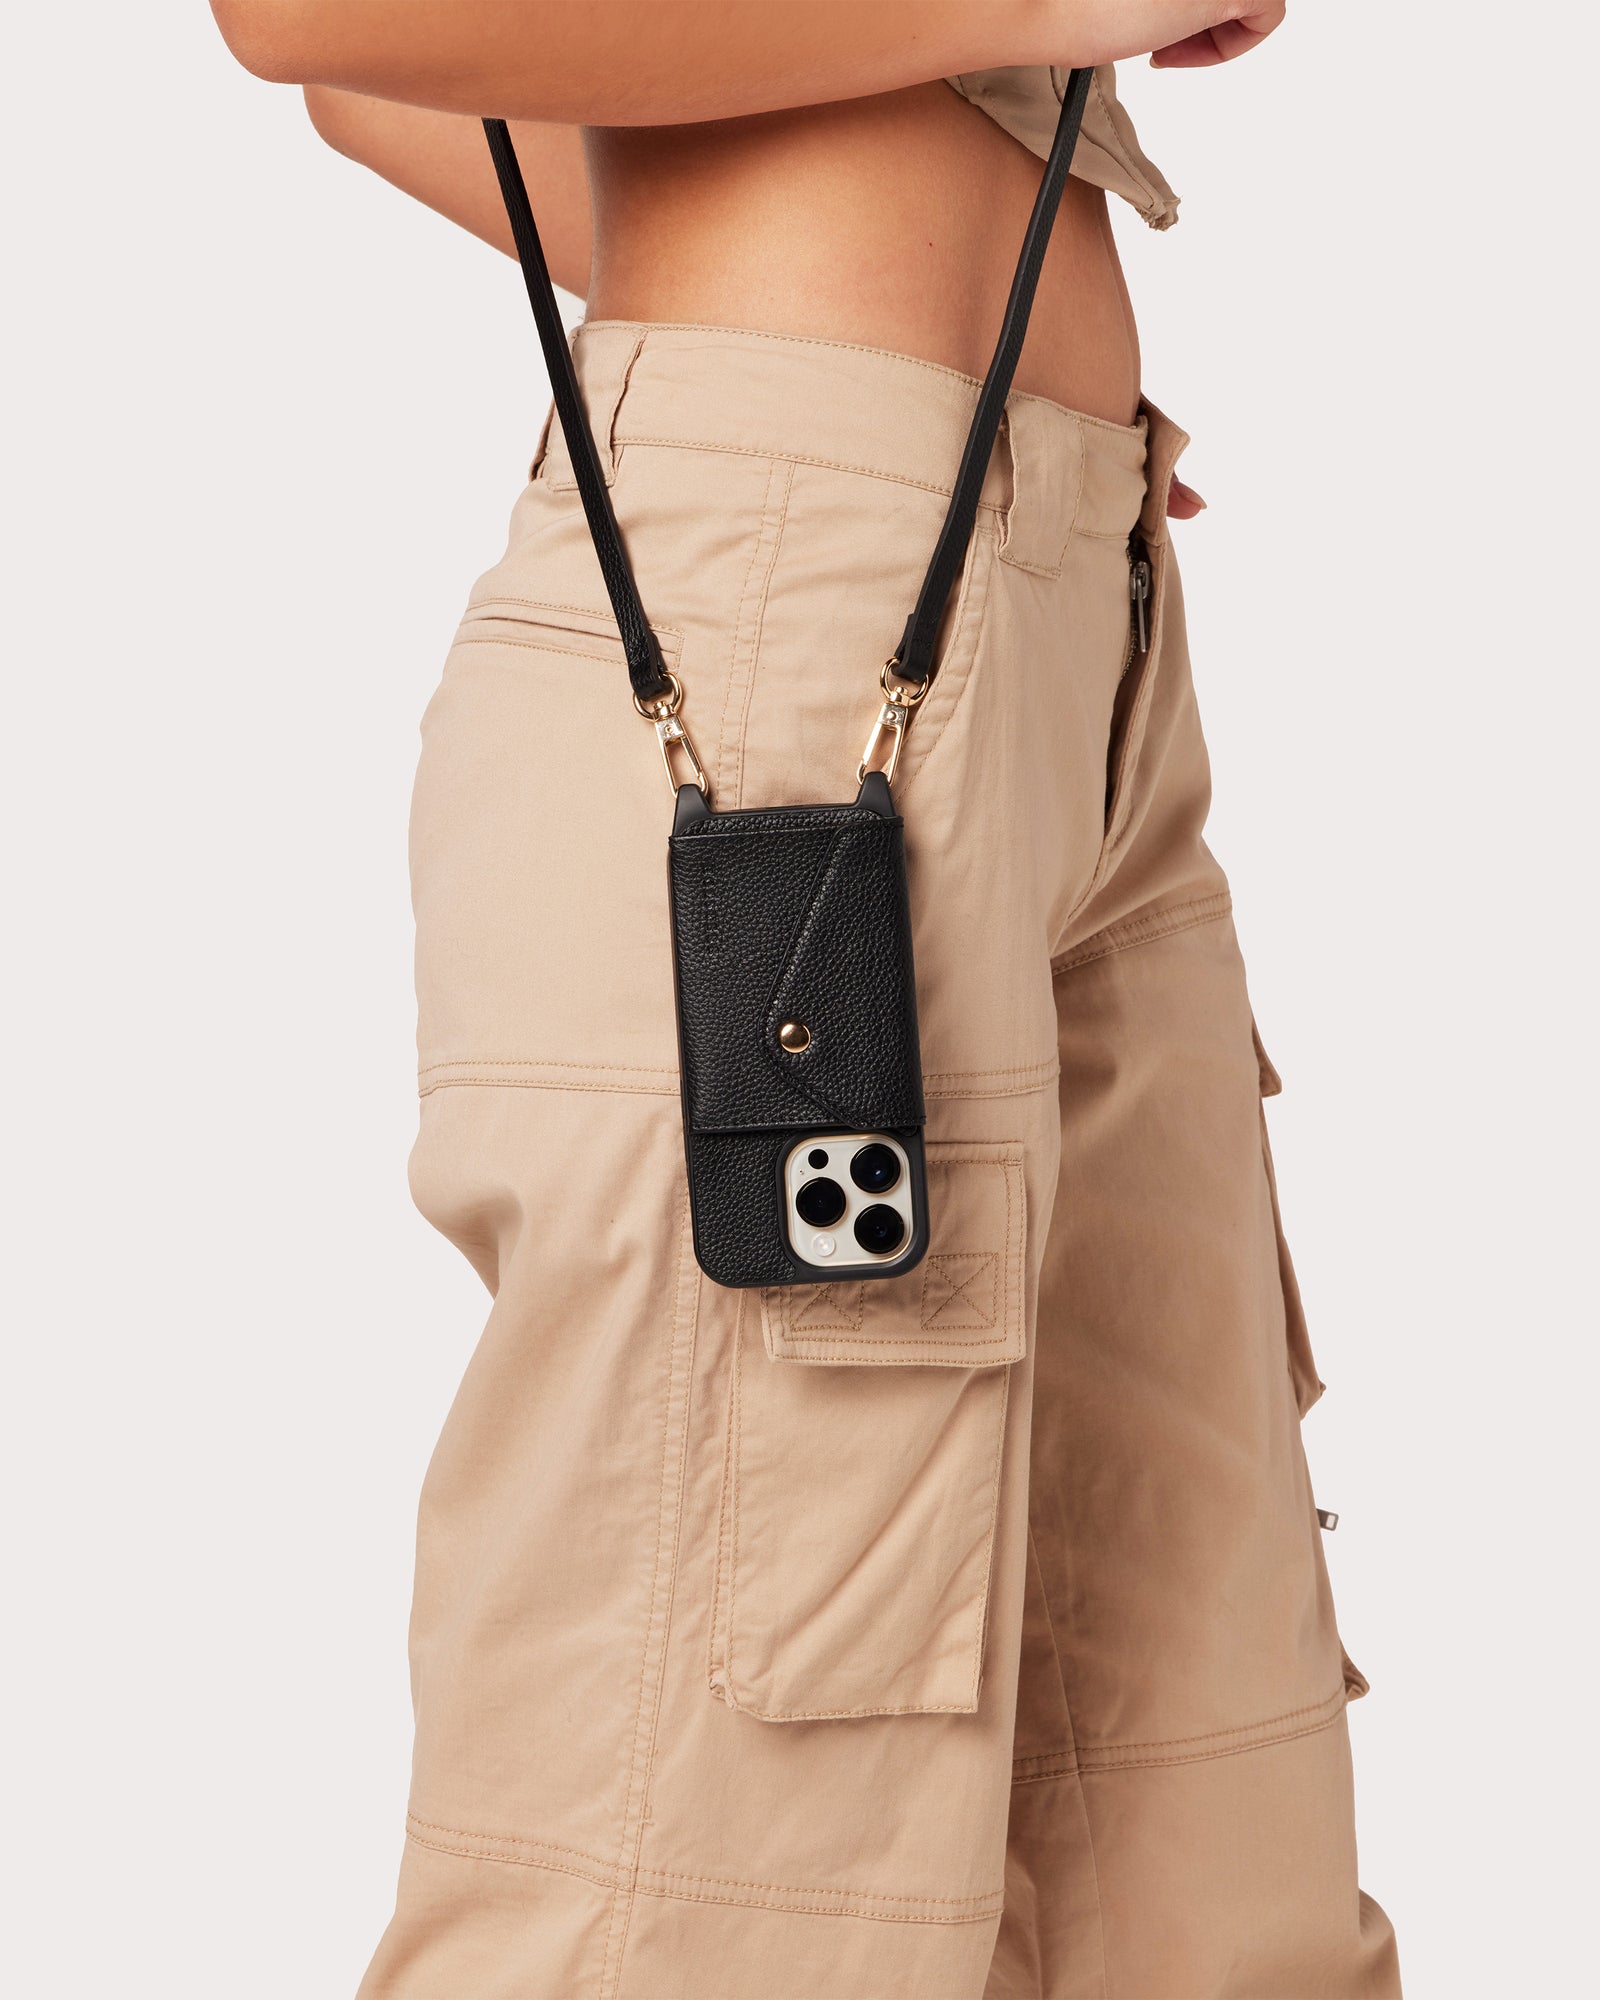 Small Crossbody Bags Leather Bag Women Cross Body Bag iPhone 